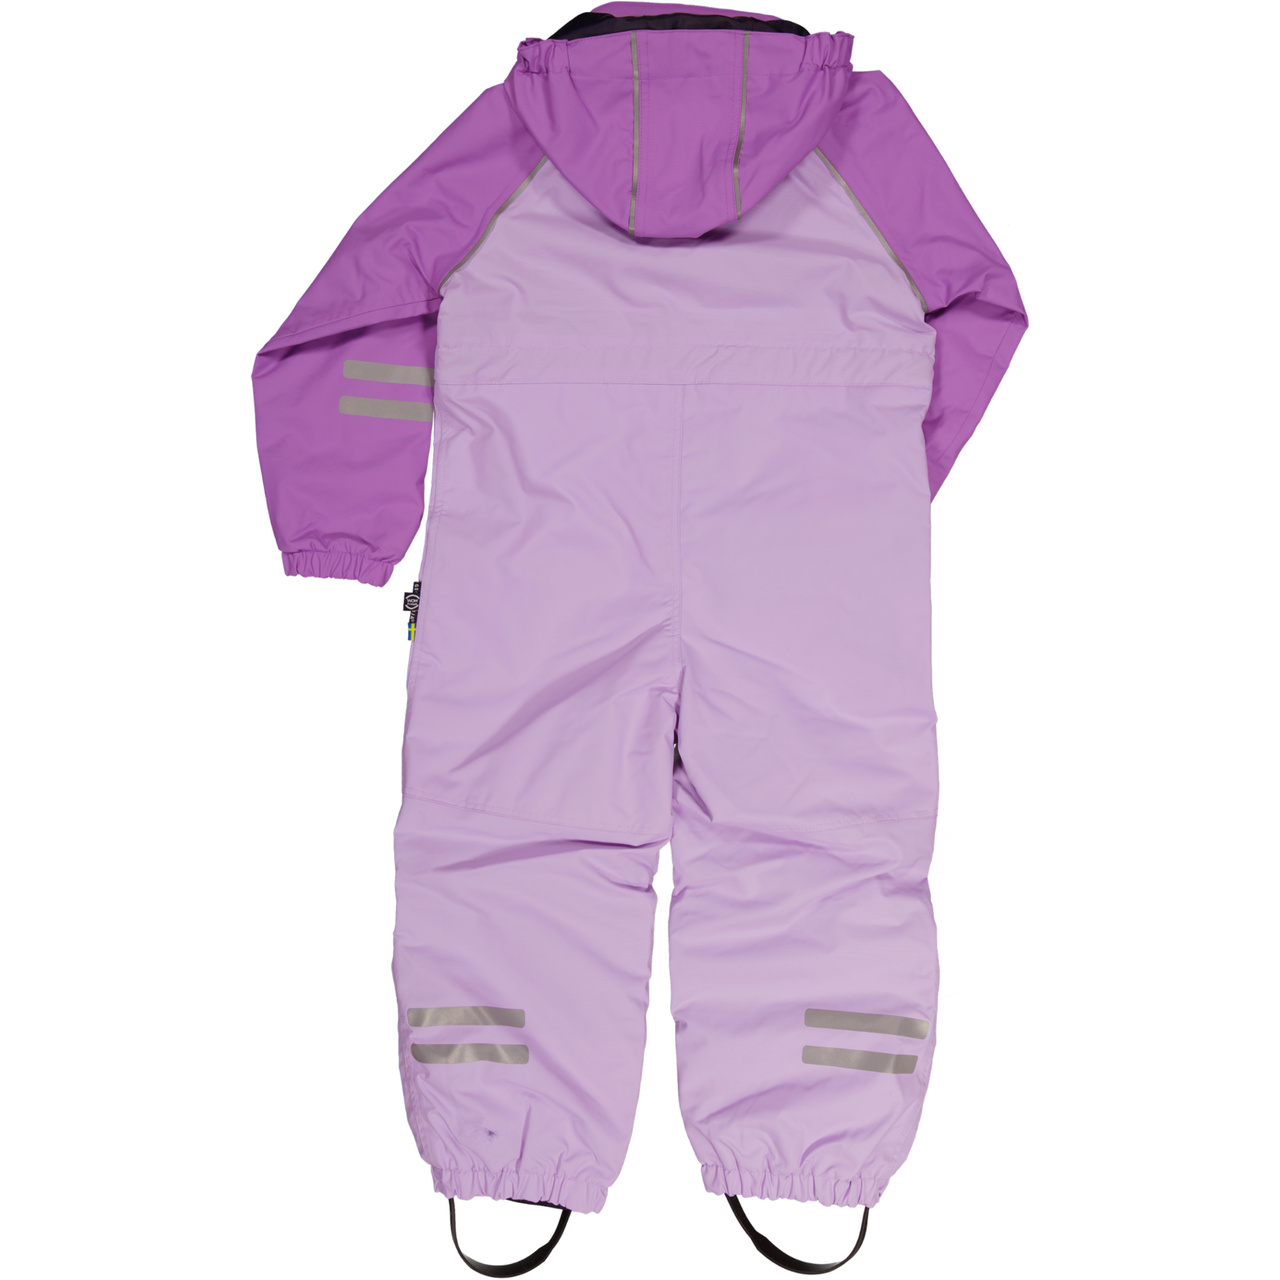 Shell overall Purple